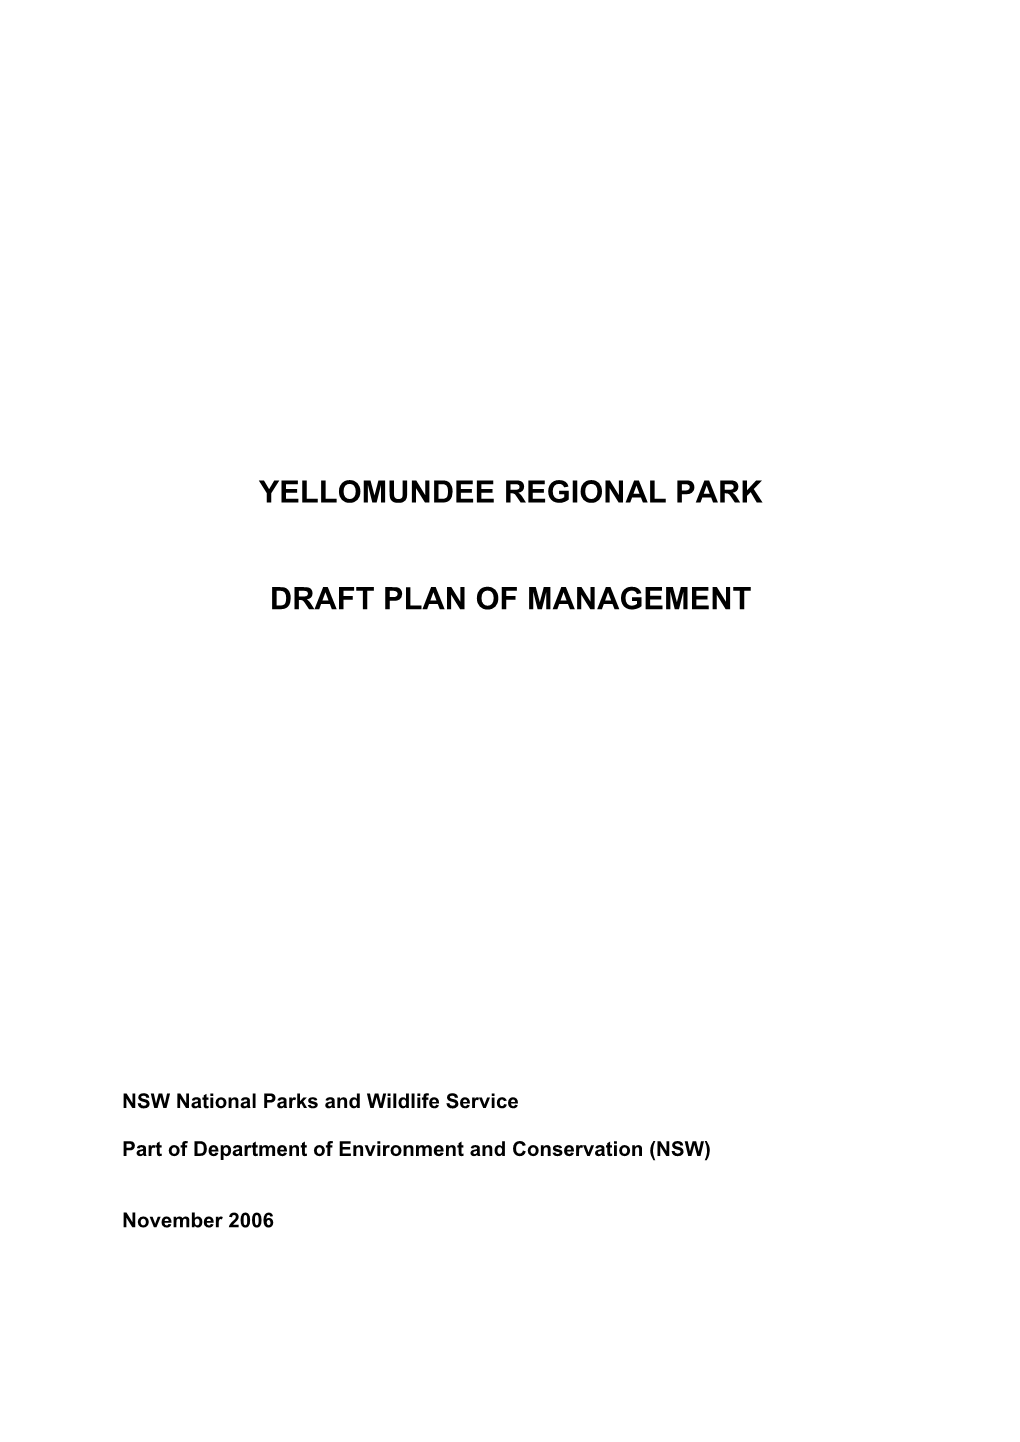 Yellomundee Regional Park